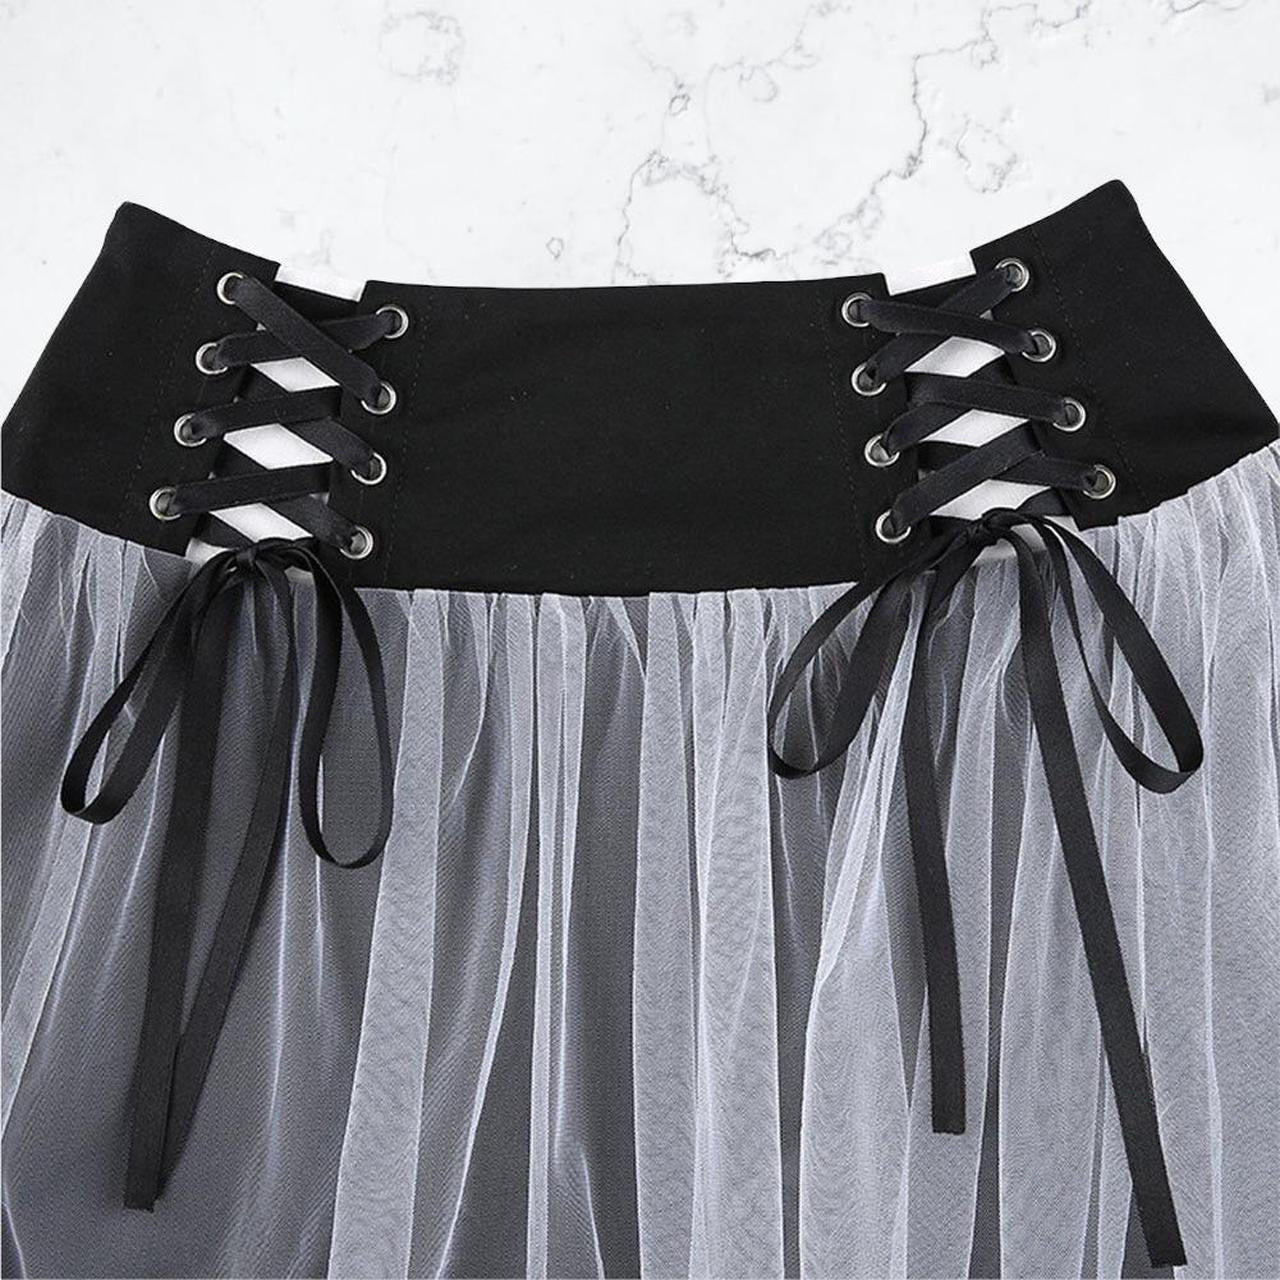 Black Lace Up Mesh Gothic Tutu Skater Skirt